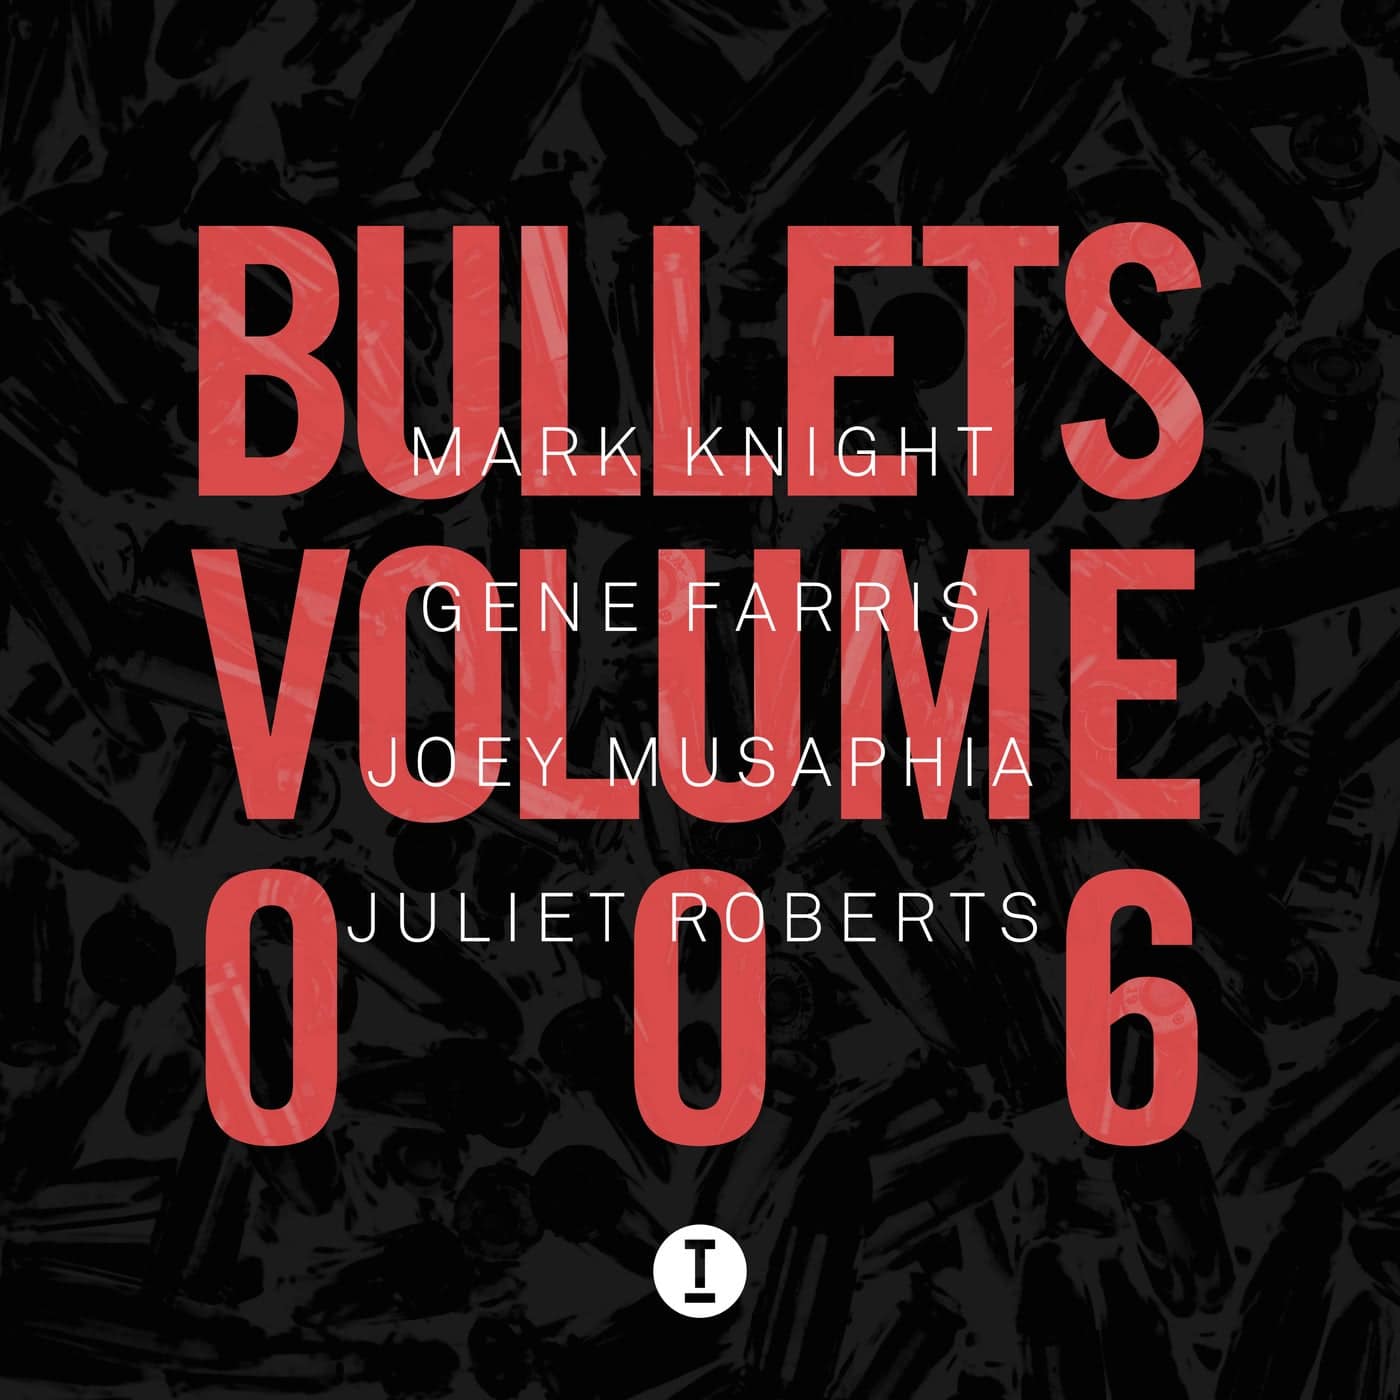 image cover: Mark Knight - Bullets Vol. 6 / TRX22701Z